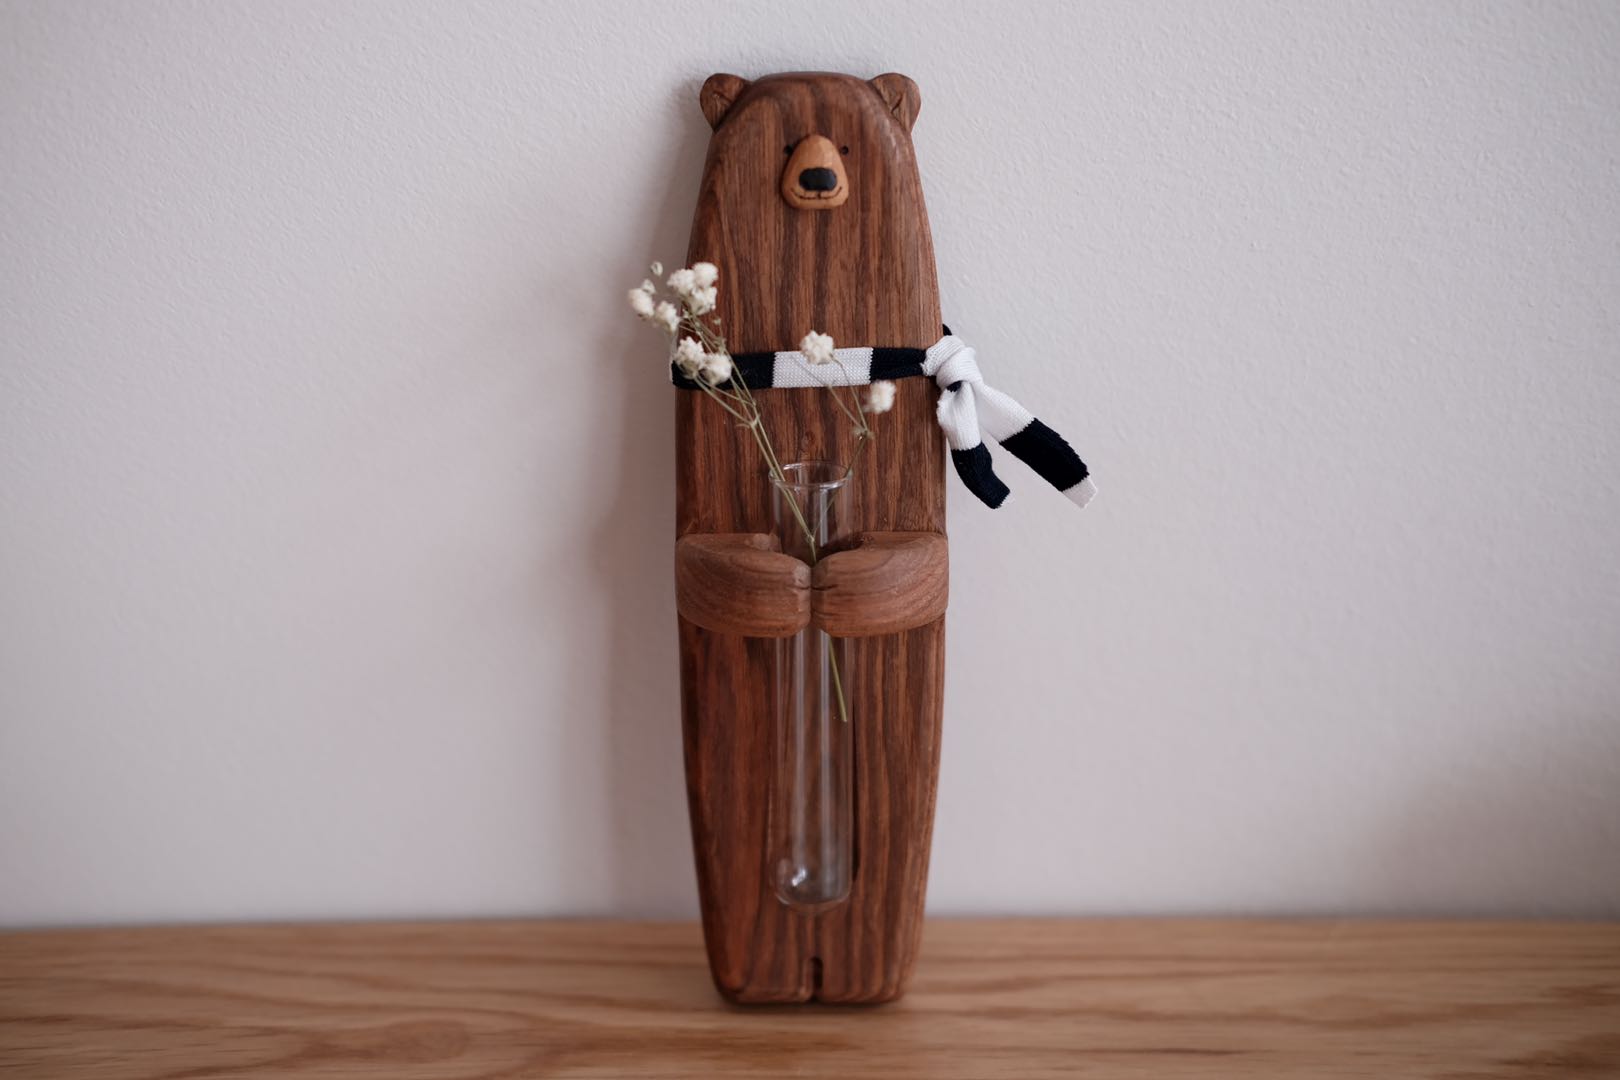 Bear wall hanging vase - By Japanese artist Kinone